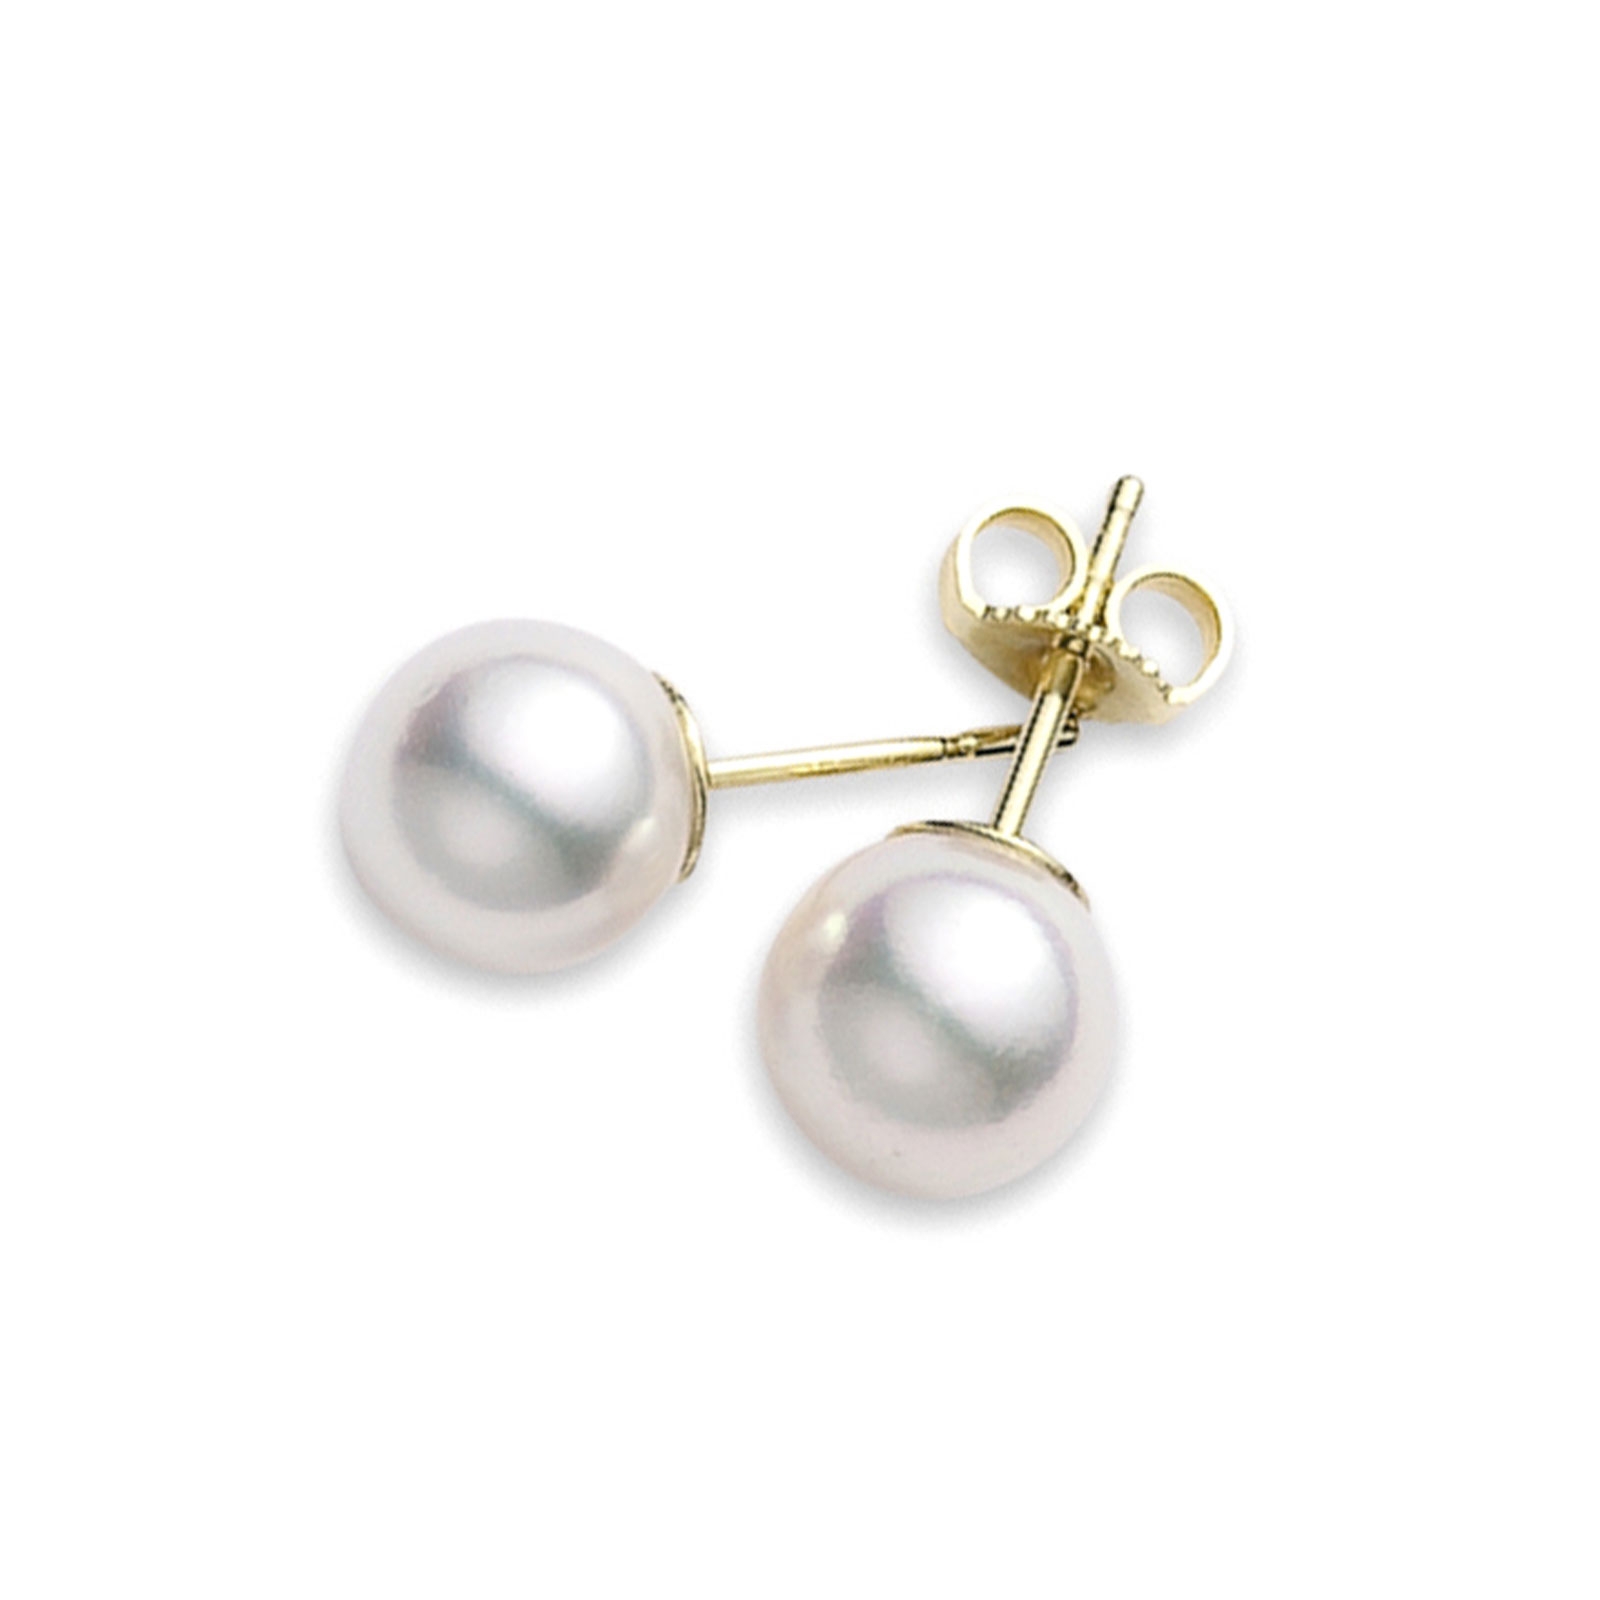 Mikimoto 7mm A Pearl Stud Earrings PES 701 K